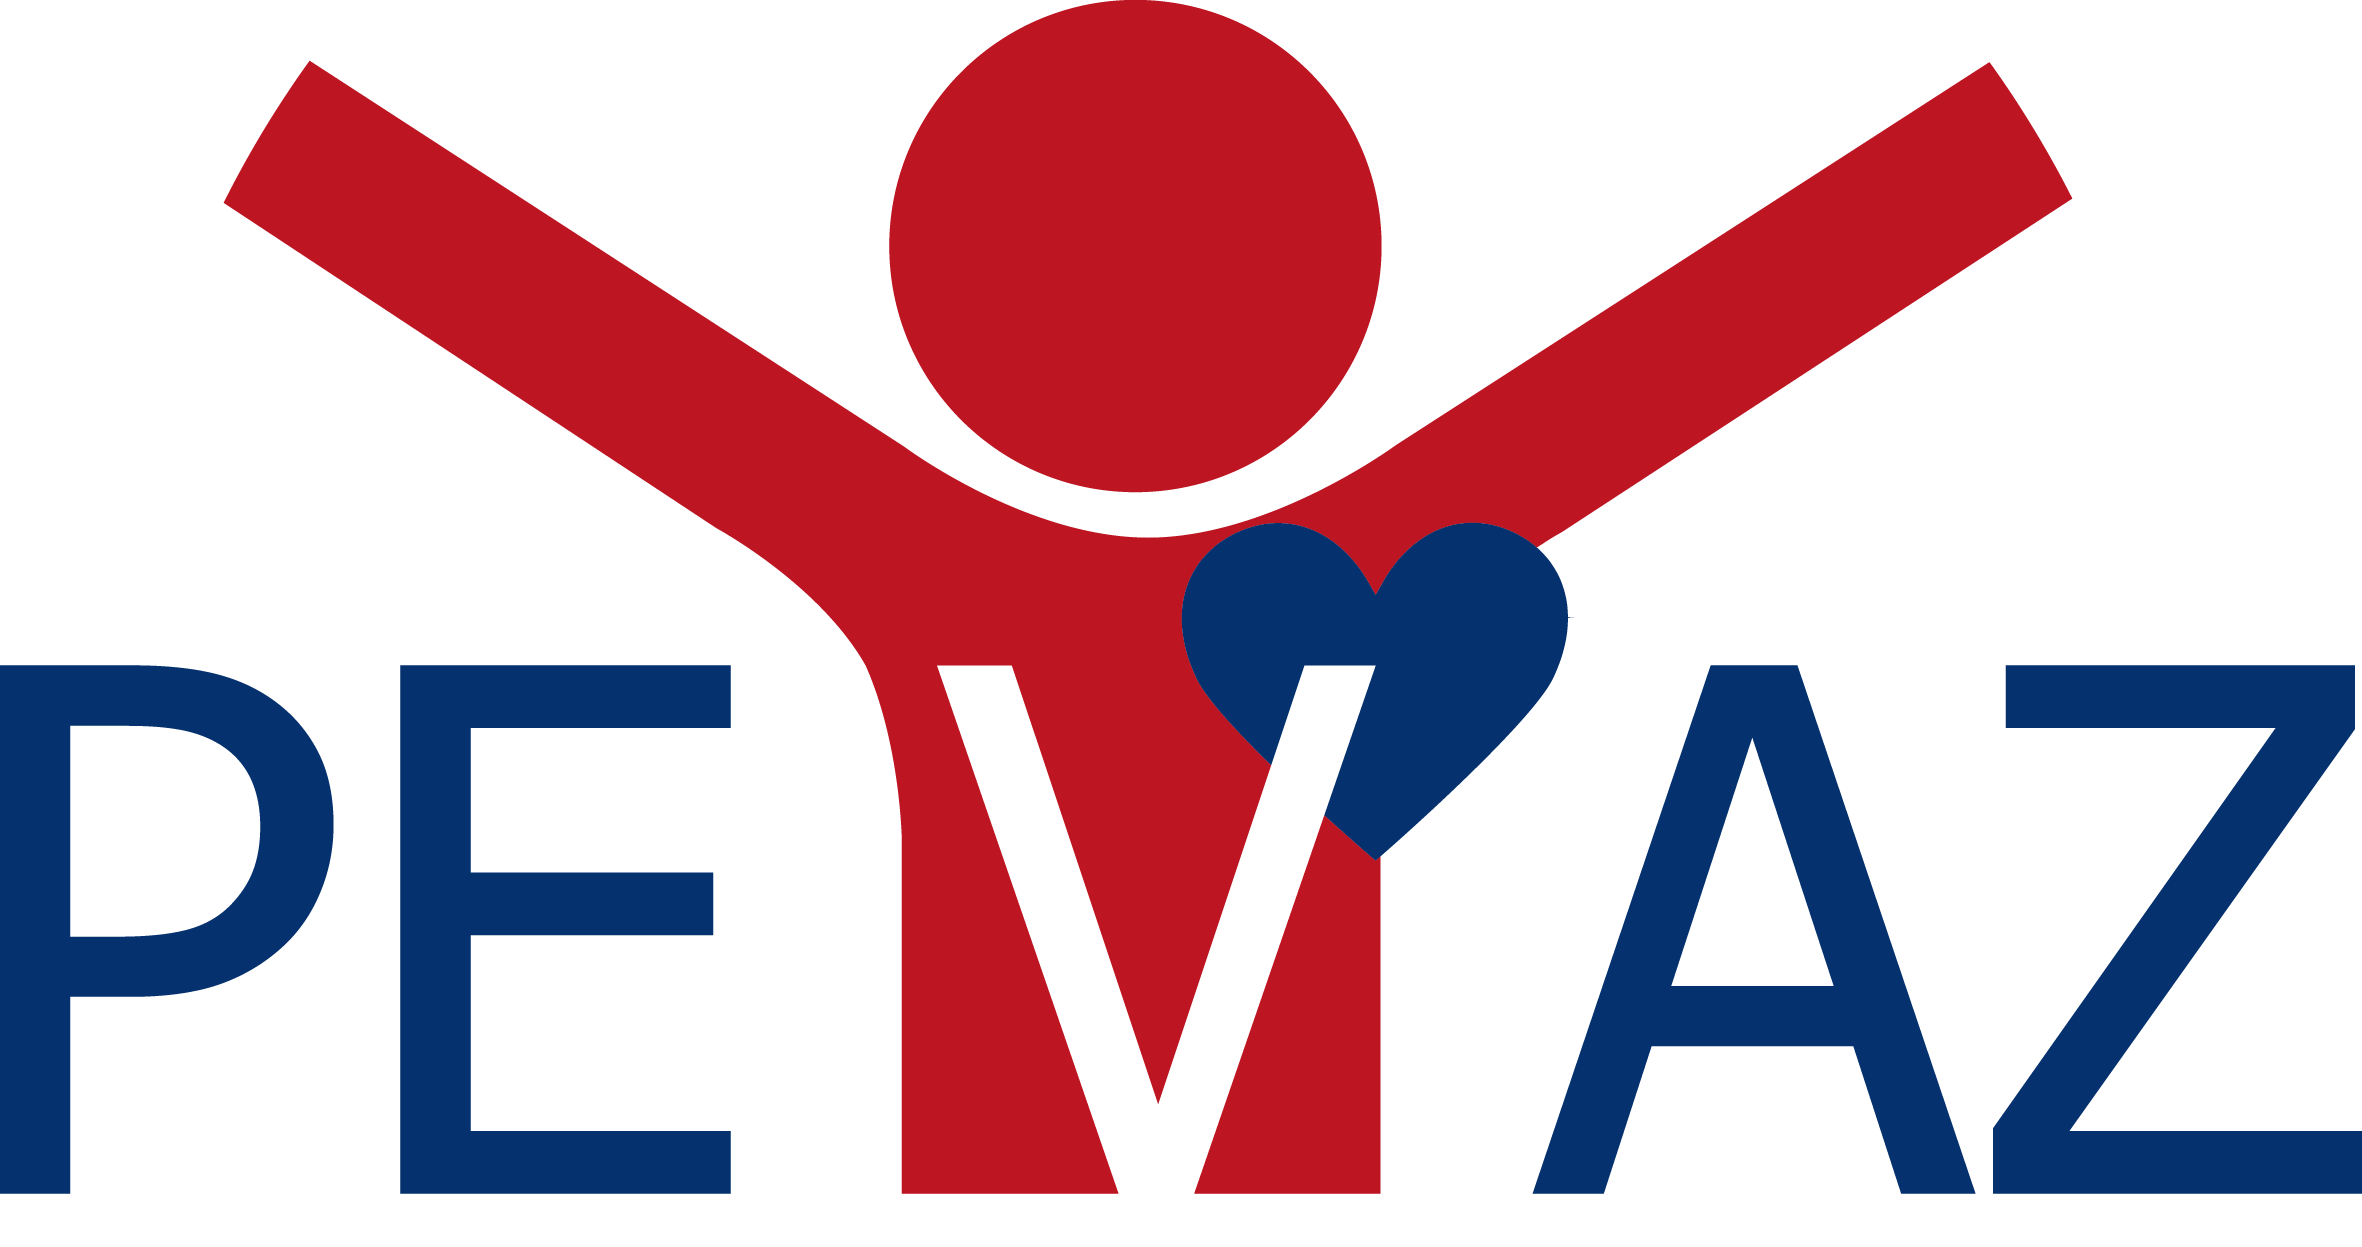 Logo PEVAZ